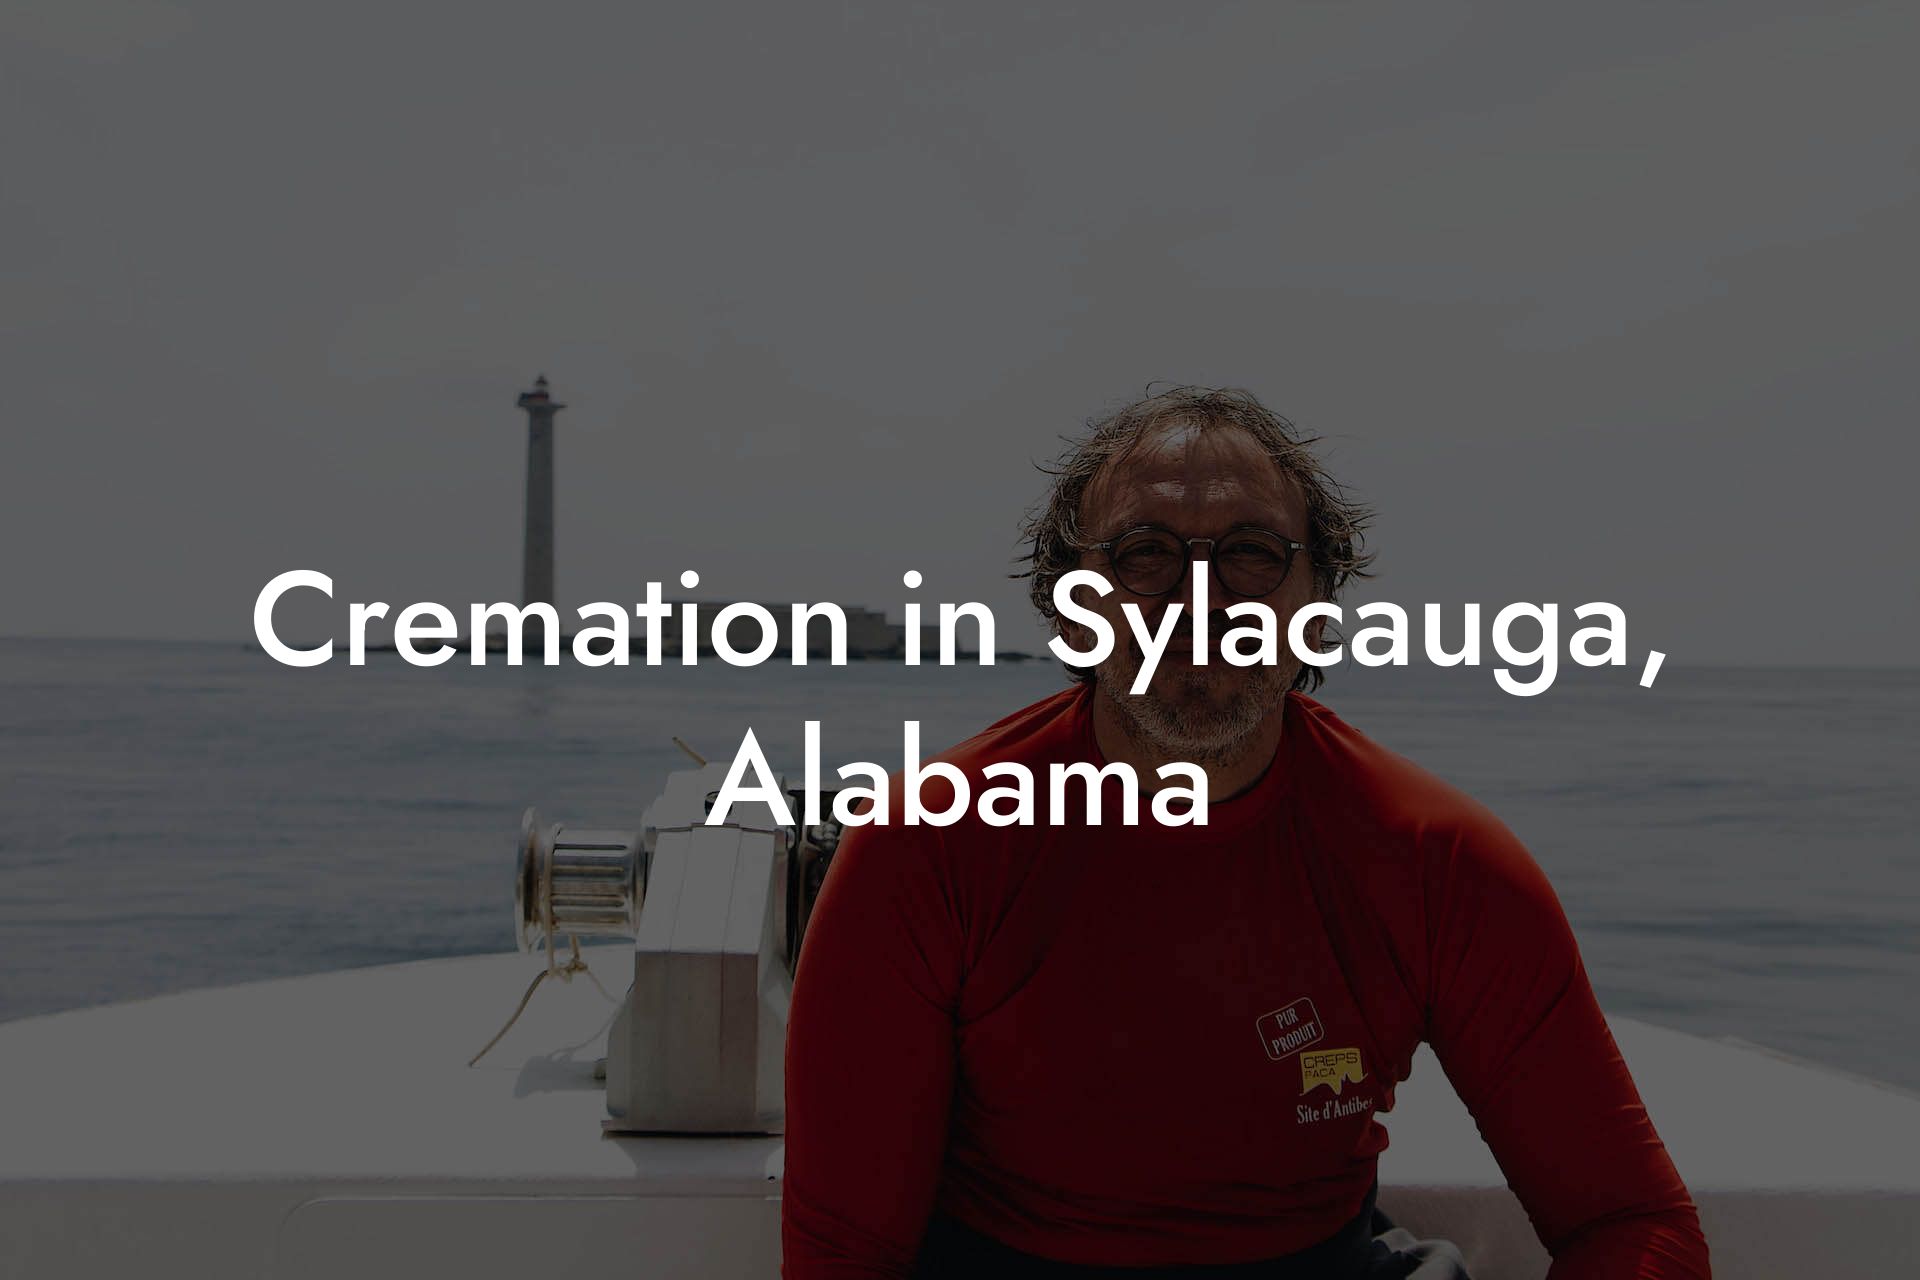 Cremation in Sylacauga, Alabama